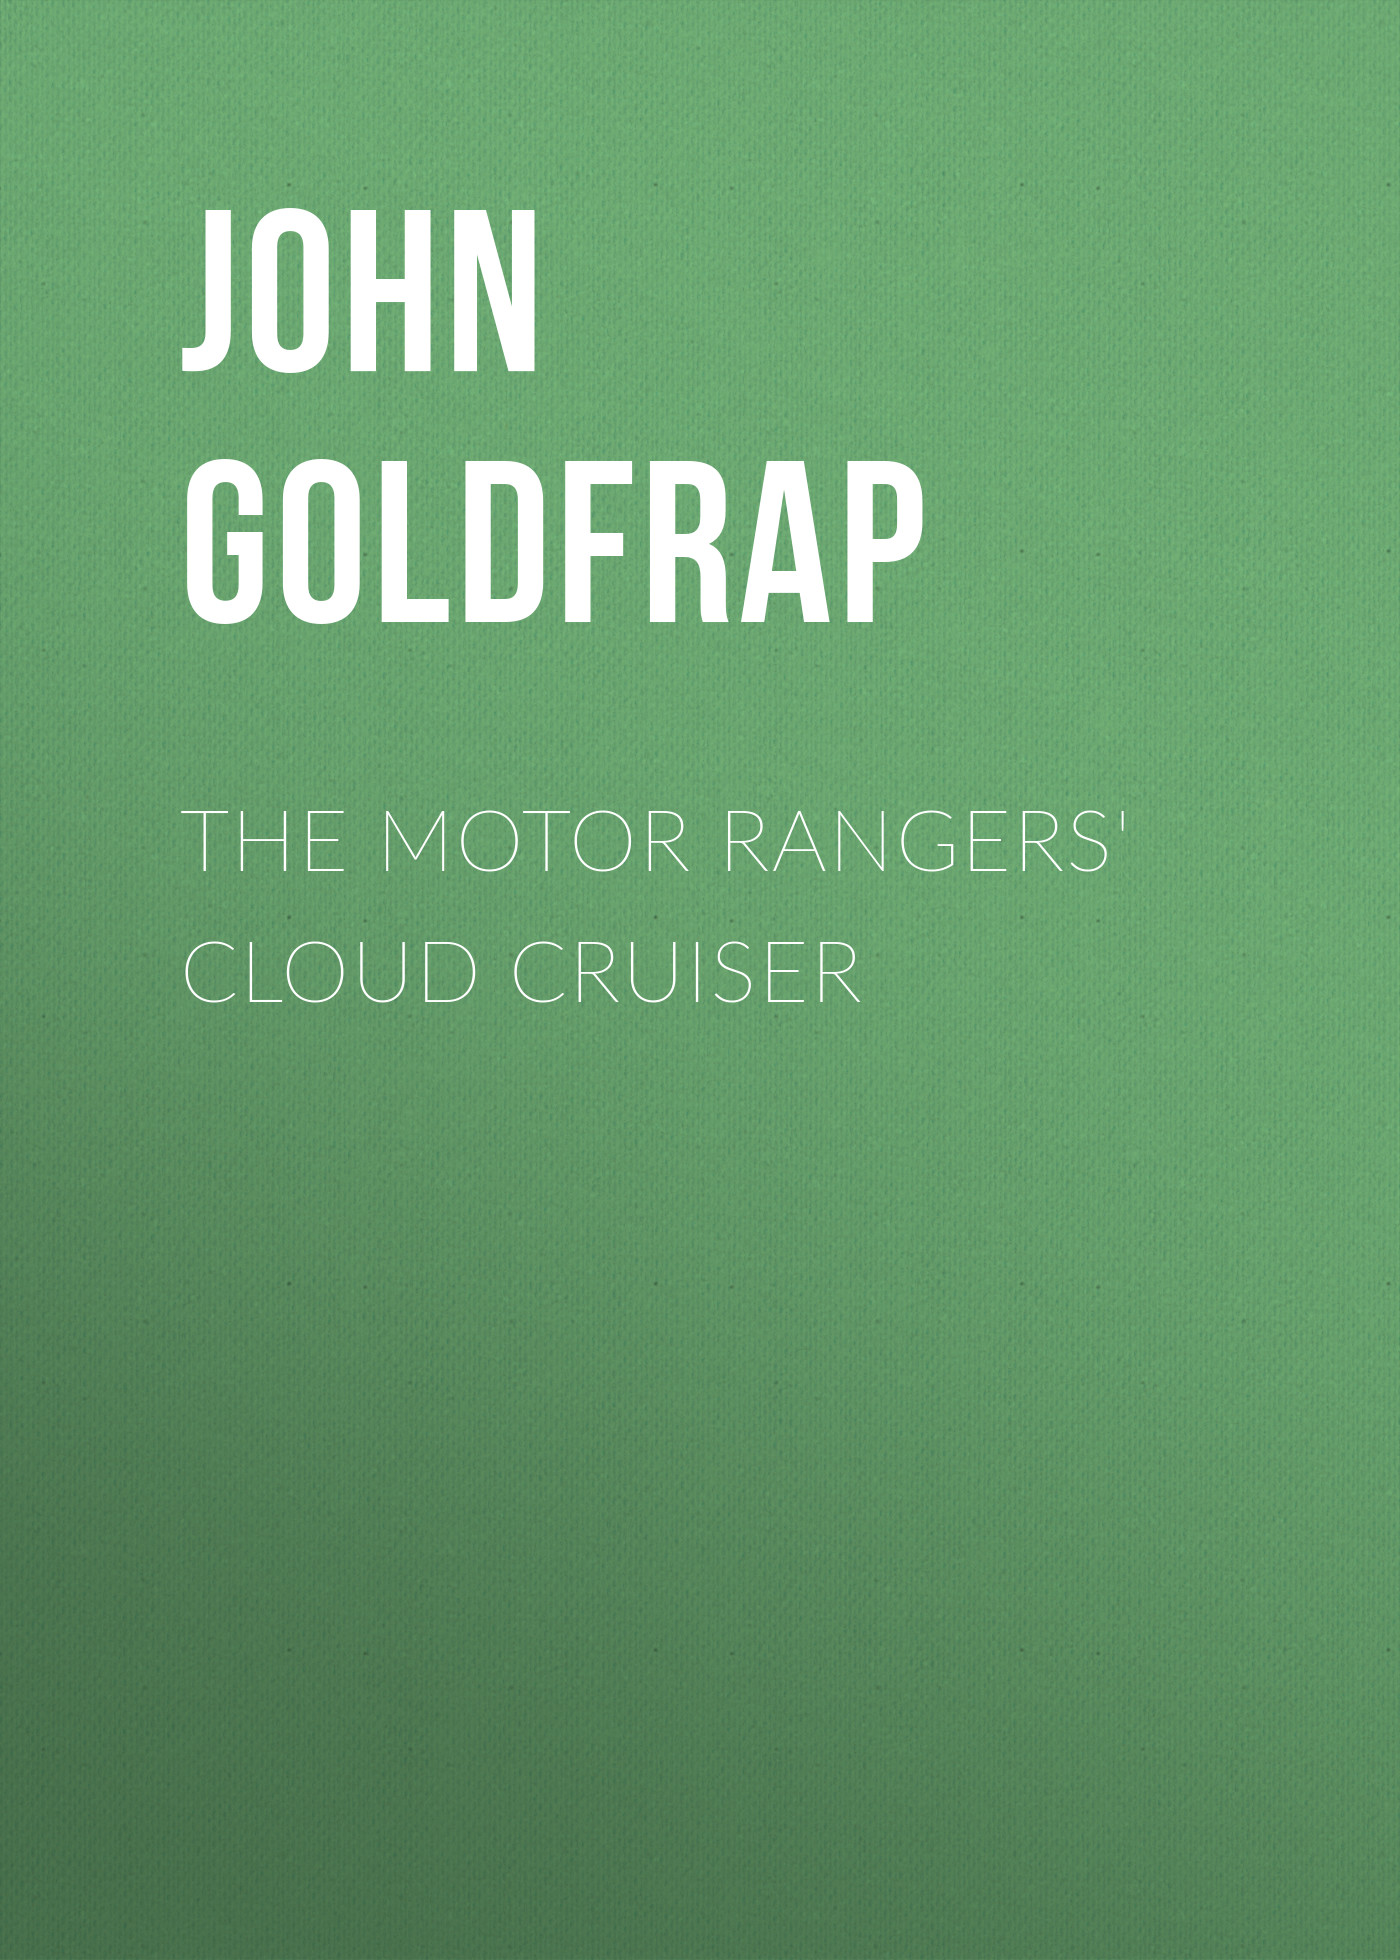 The Motor Rangers'Cloud Cruiser